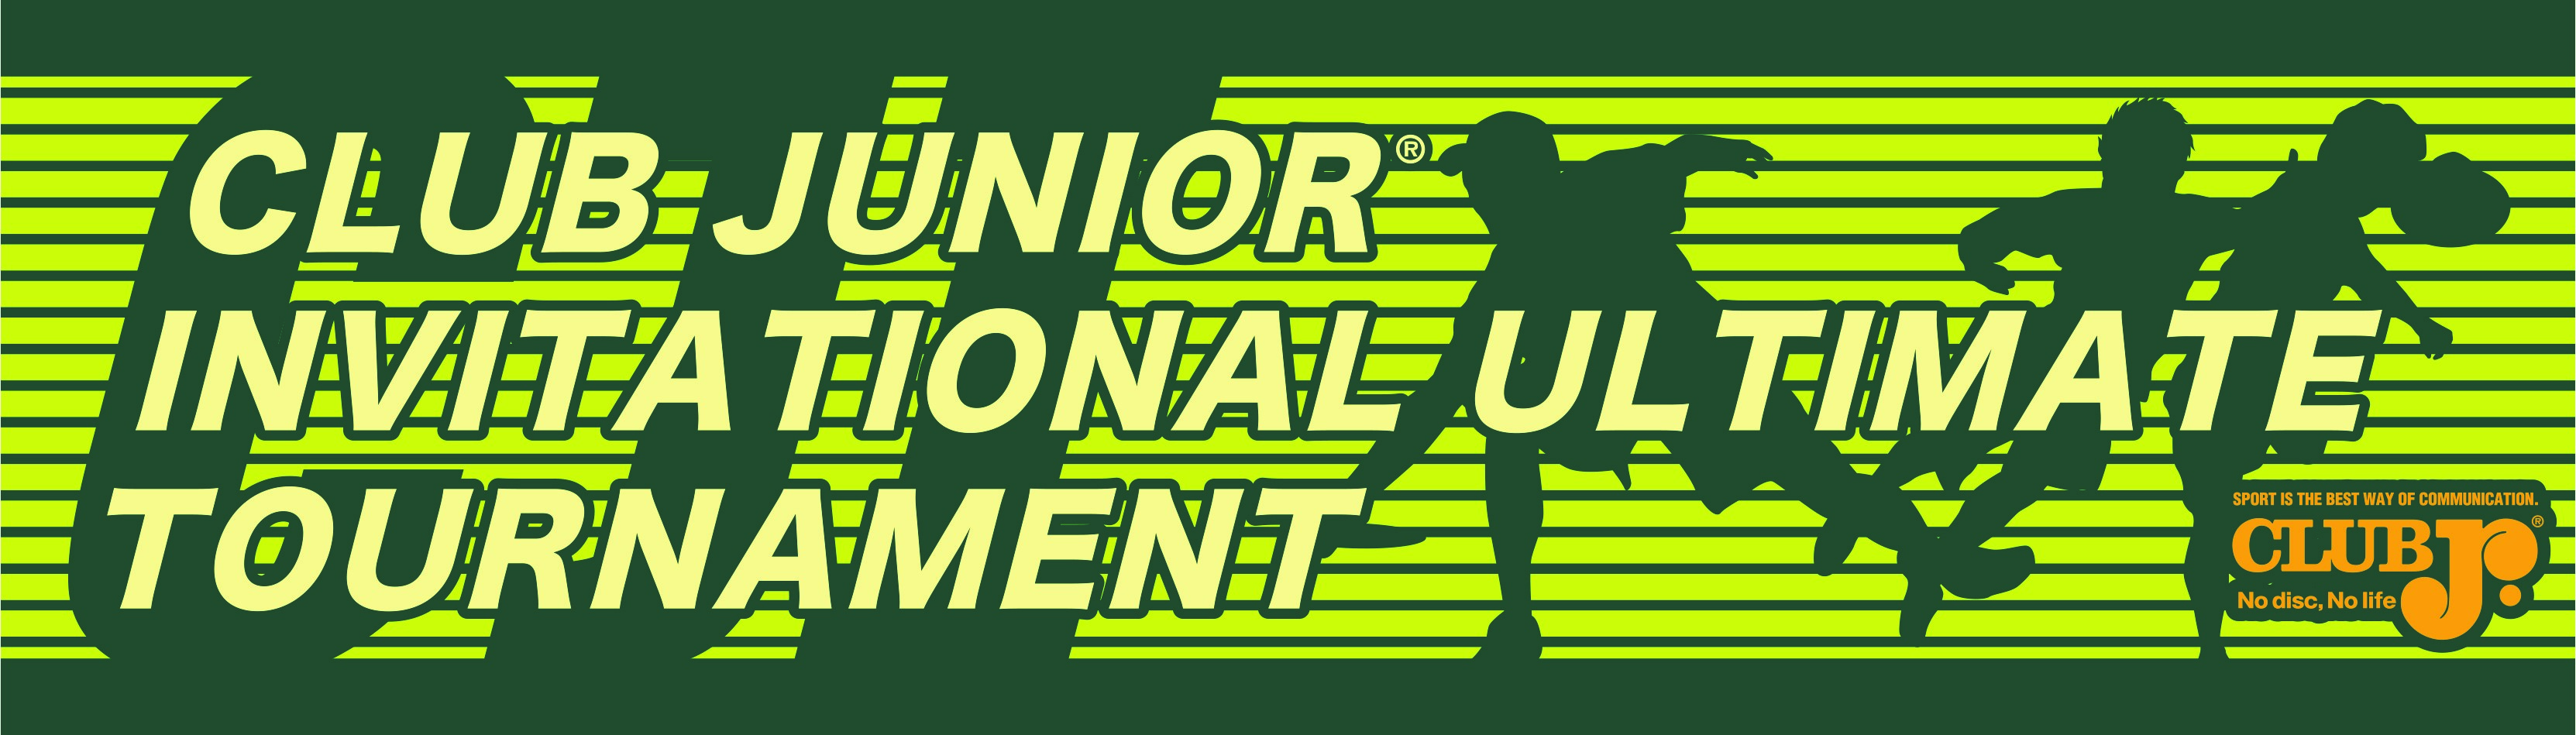 2021 CLUB Jr. Invitational Ultimate Tournament (CJI)